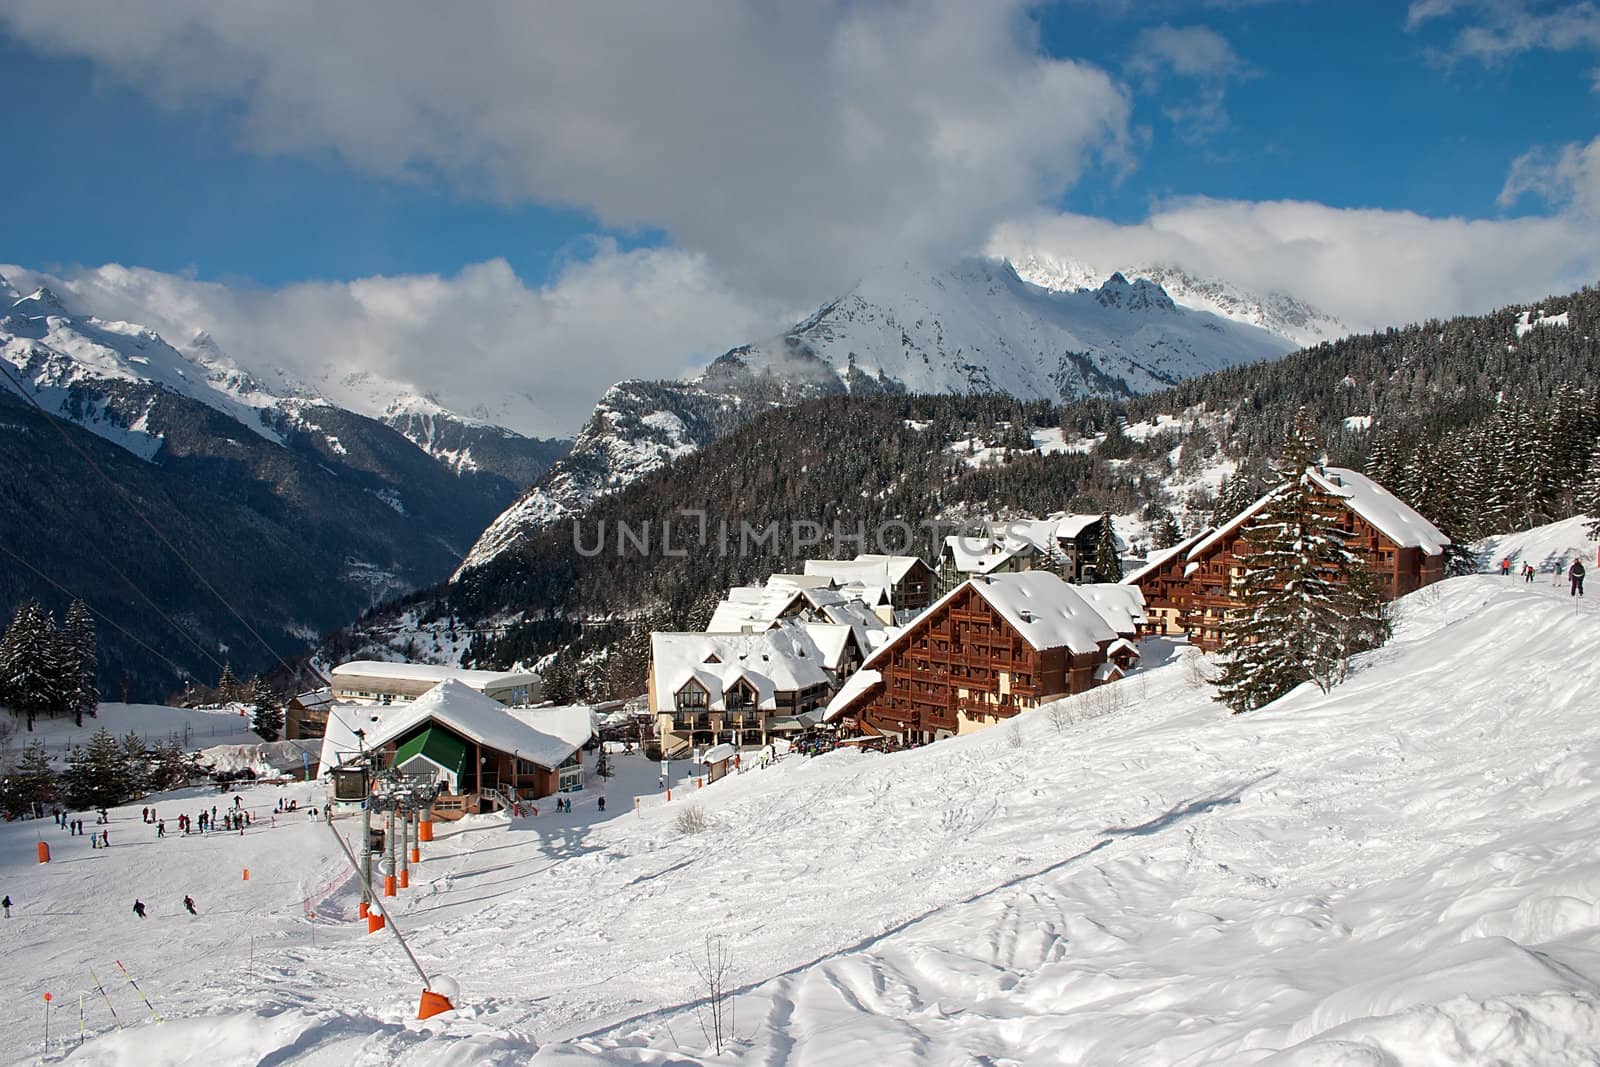 Alps in winter - 3 by Kartouchken